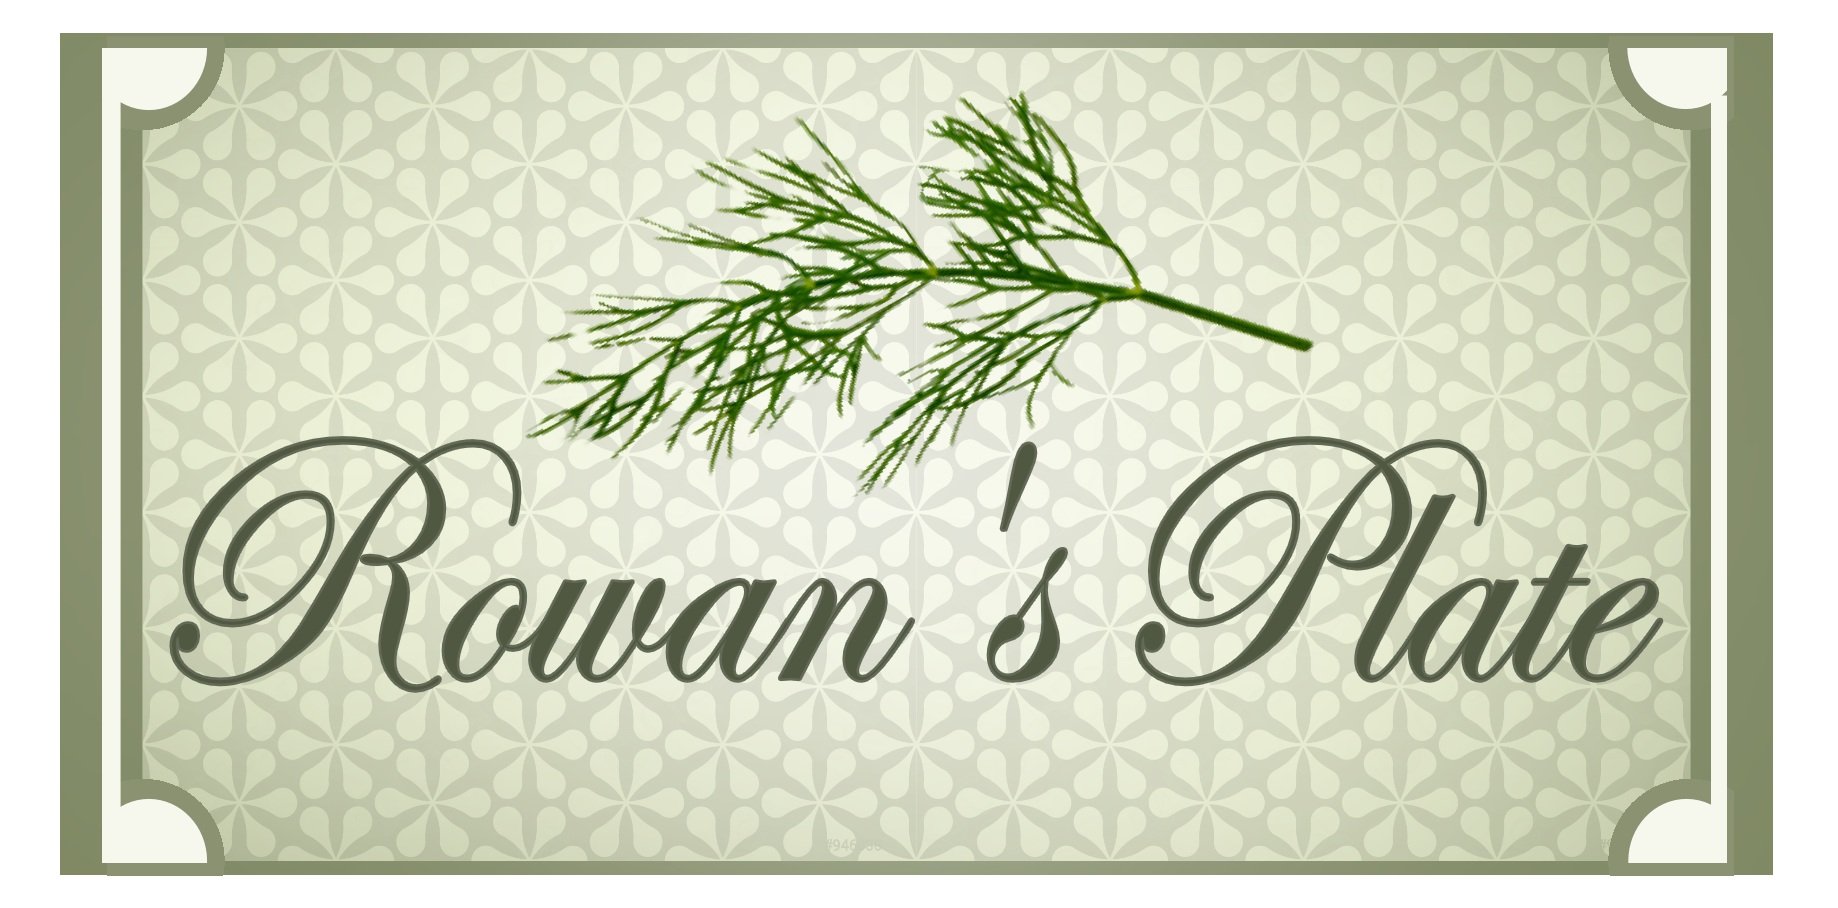 Rowan’s Plate